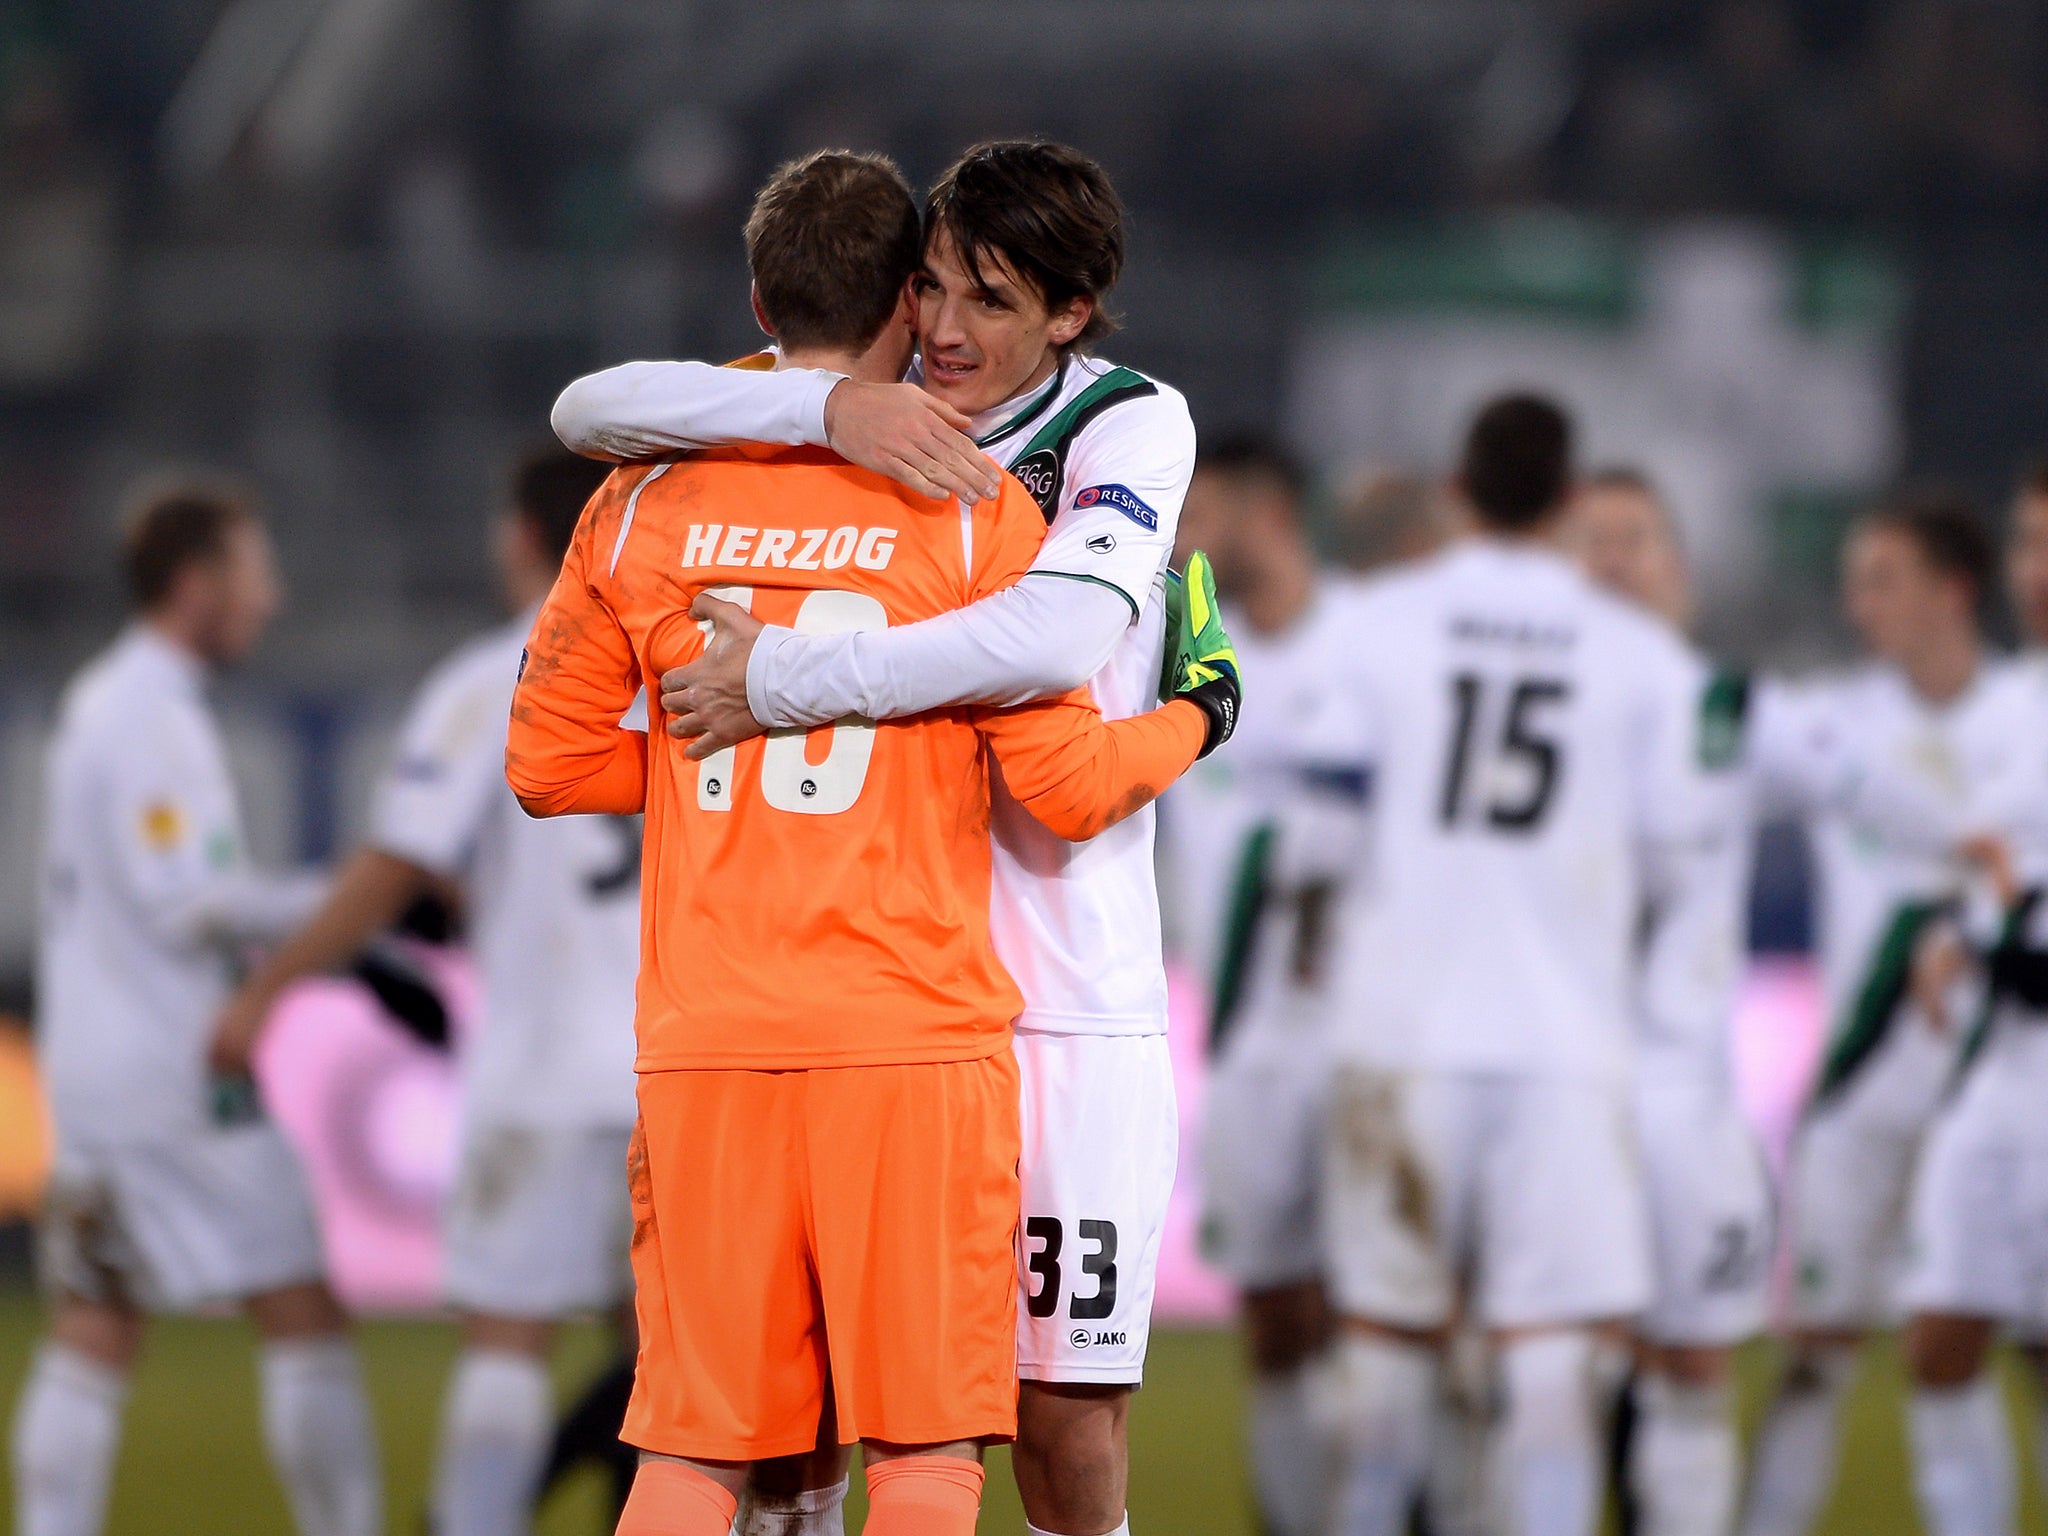 Swansea defender Ben Davies embraces his goalkeeper Marcel Herzog despite the 1-0 defeat to St Gallen following their Europa League progression